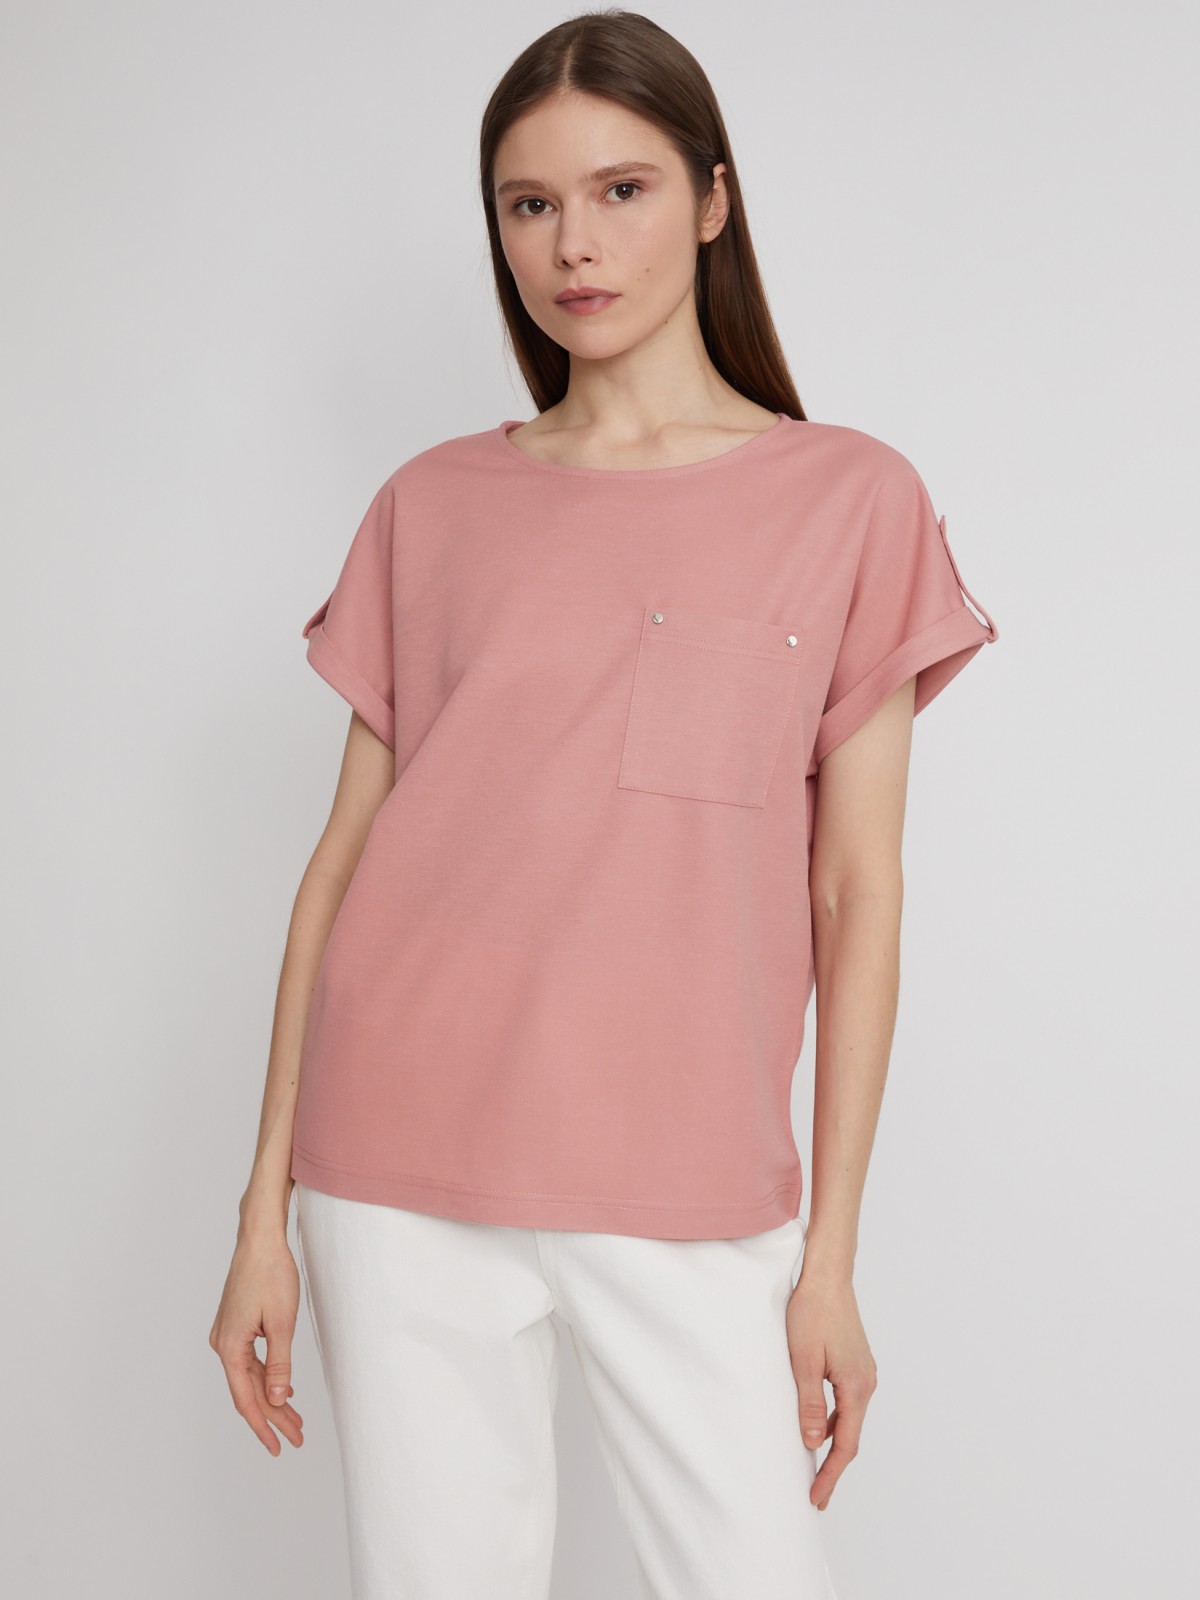 Блузка-футболка с коротким рукавом zolla 023213259023, цвет розовый, размер XS - фото 4